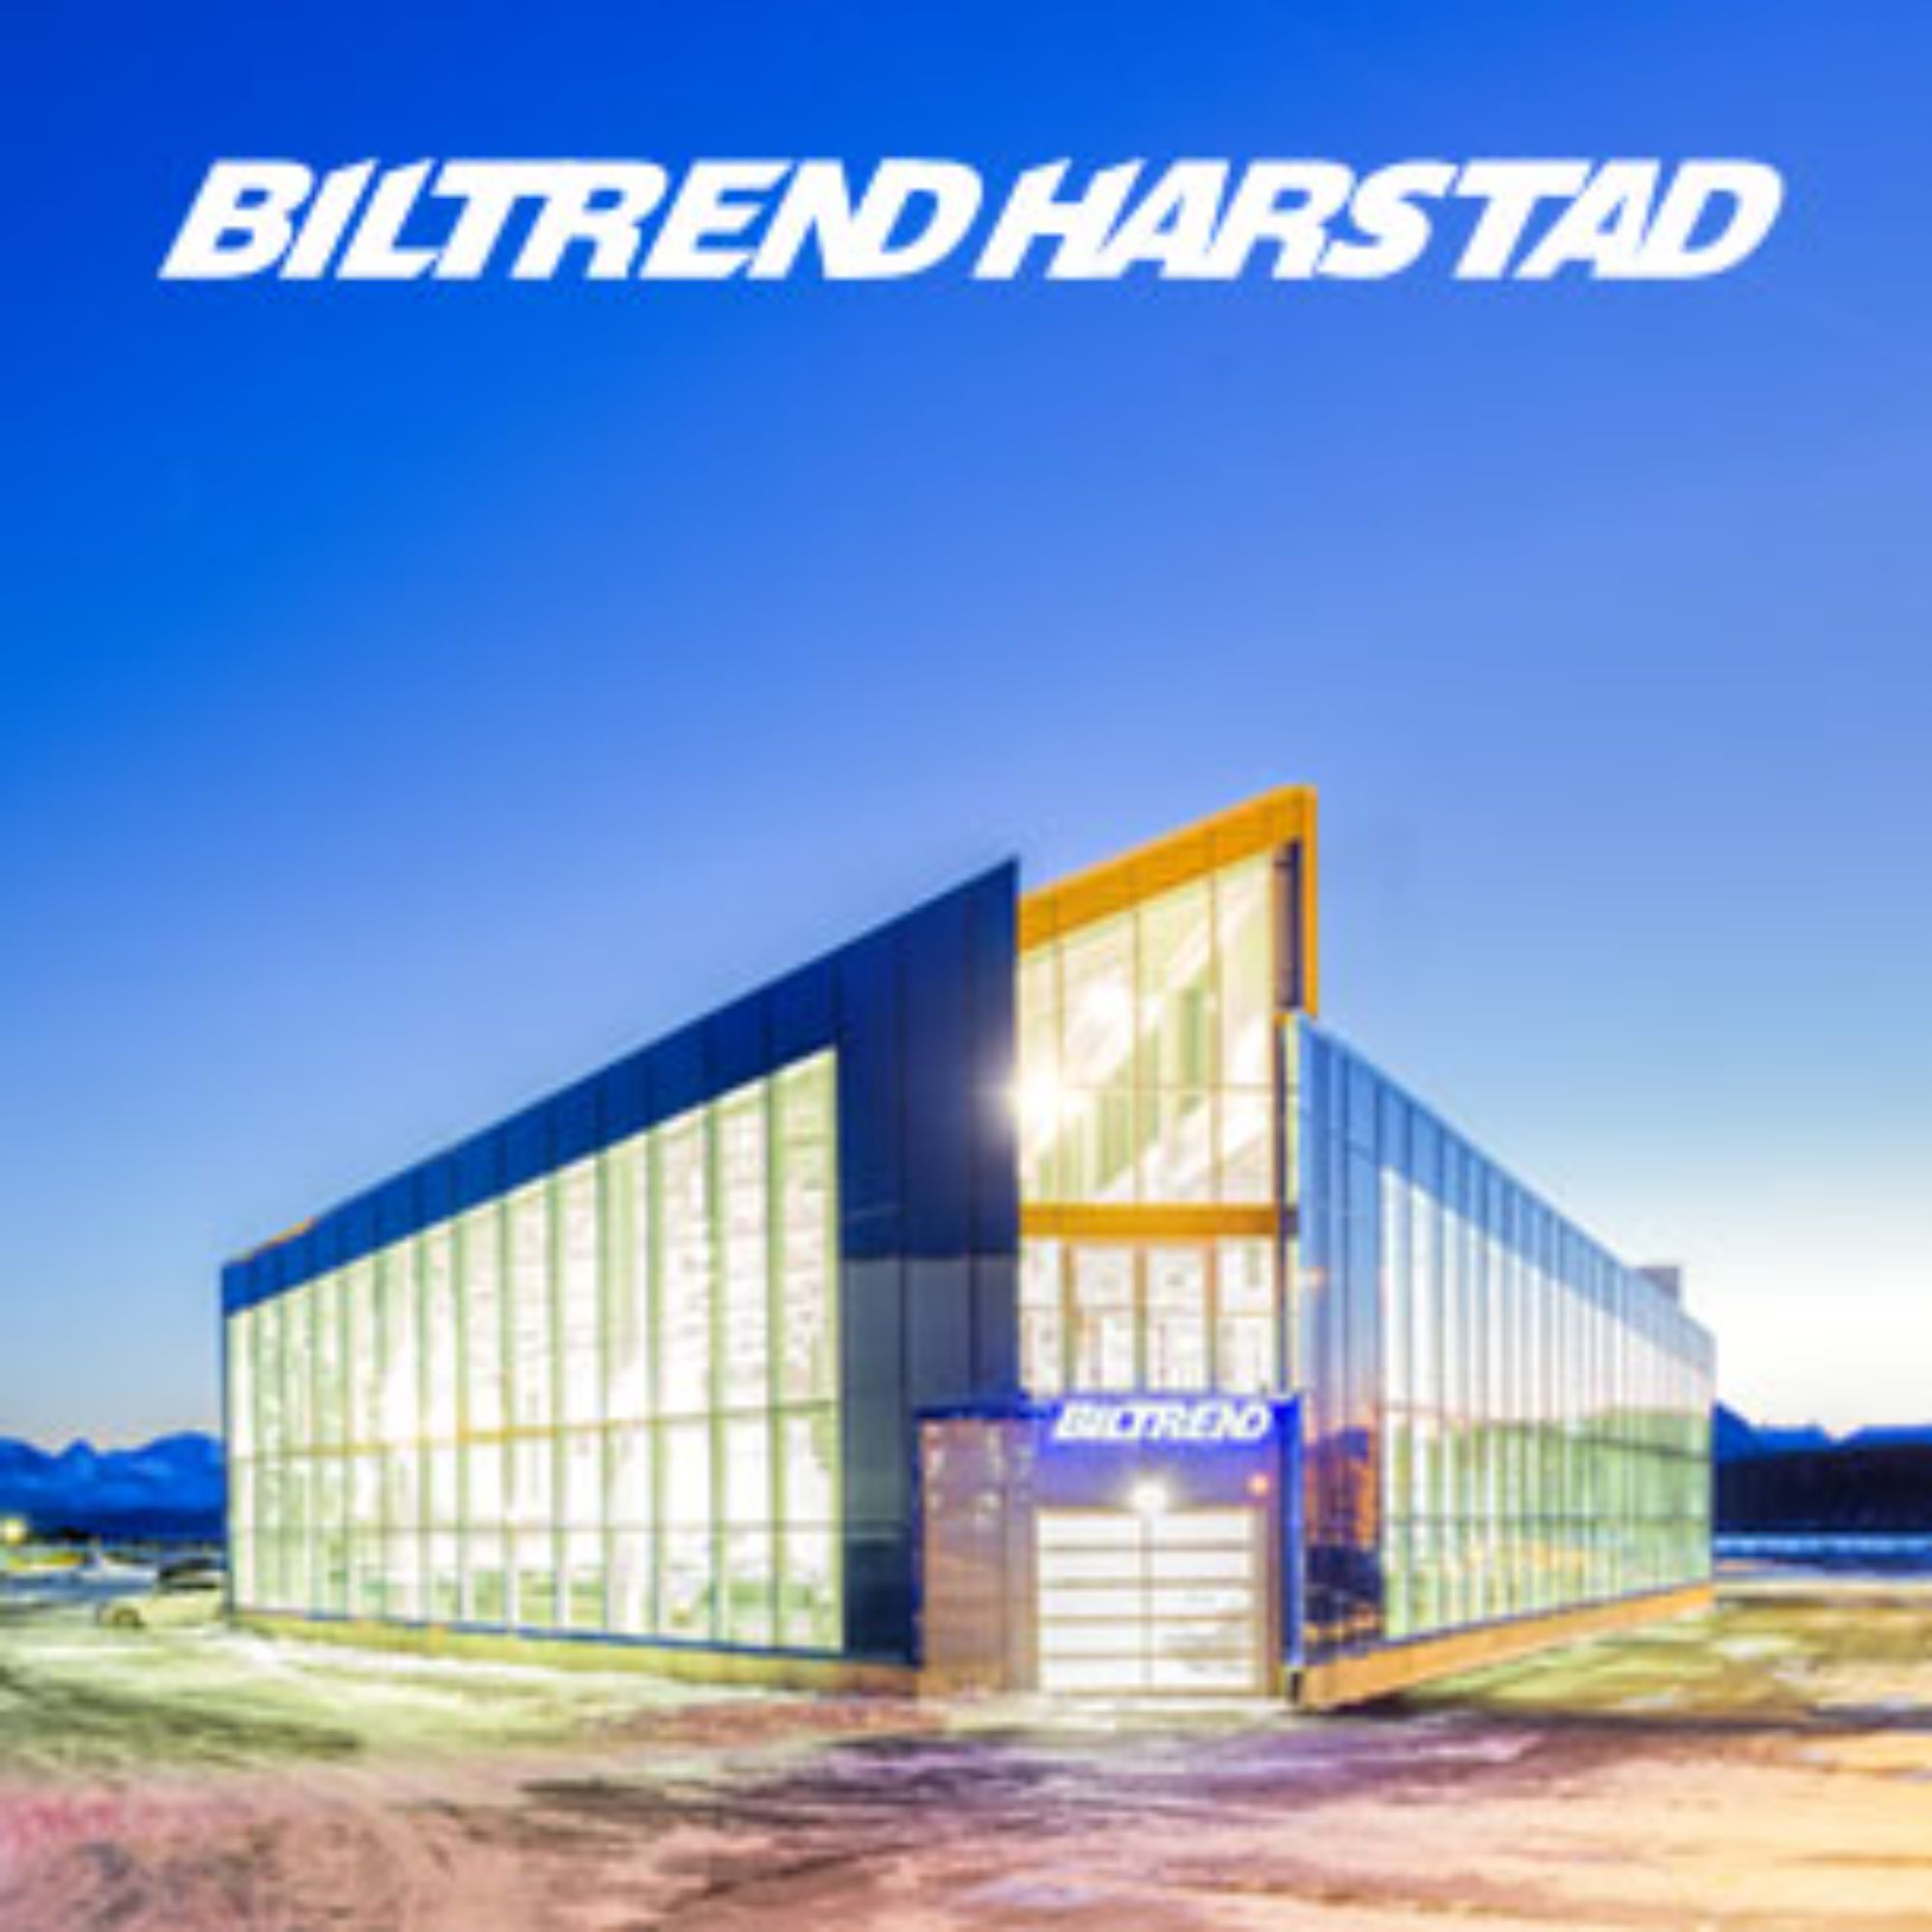 Biltrend Harstad